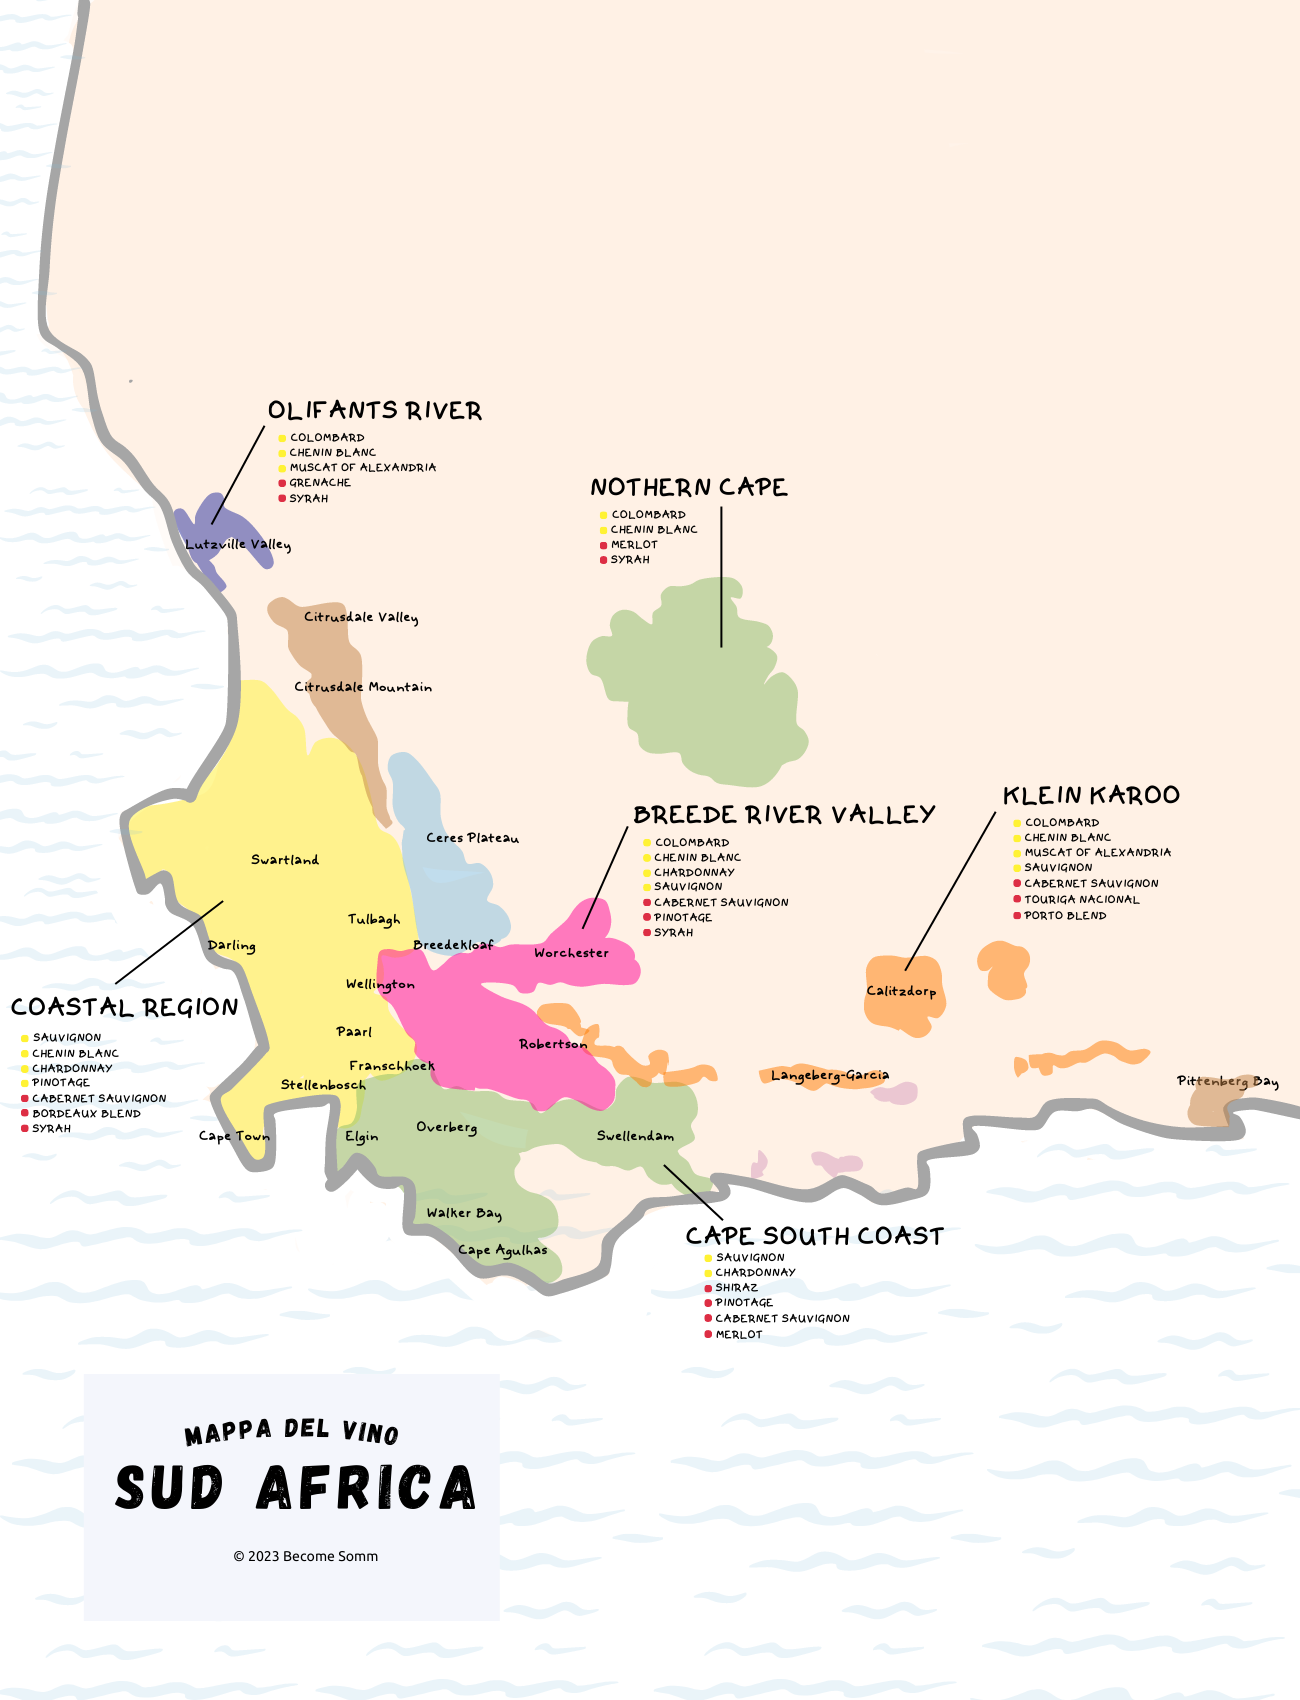 Wine map south africa
mappa del vino sud africa
suid-afrika wynkaart